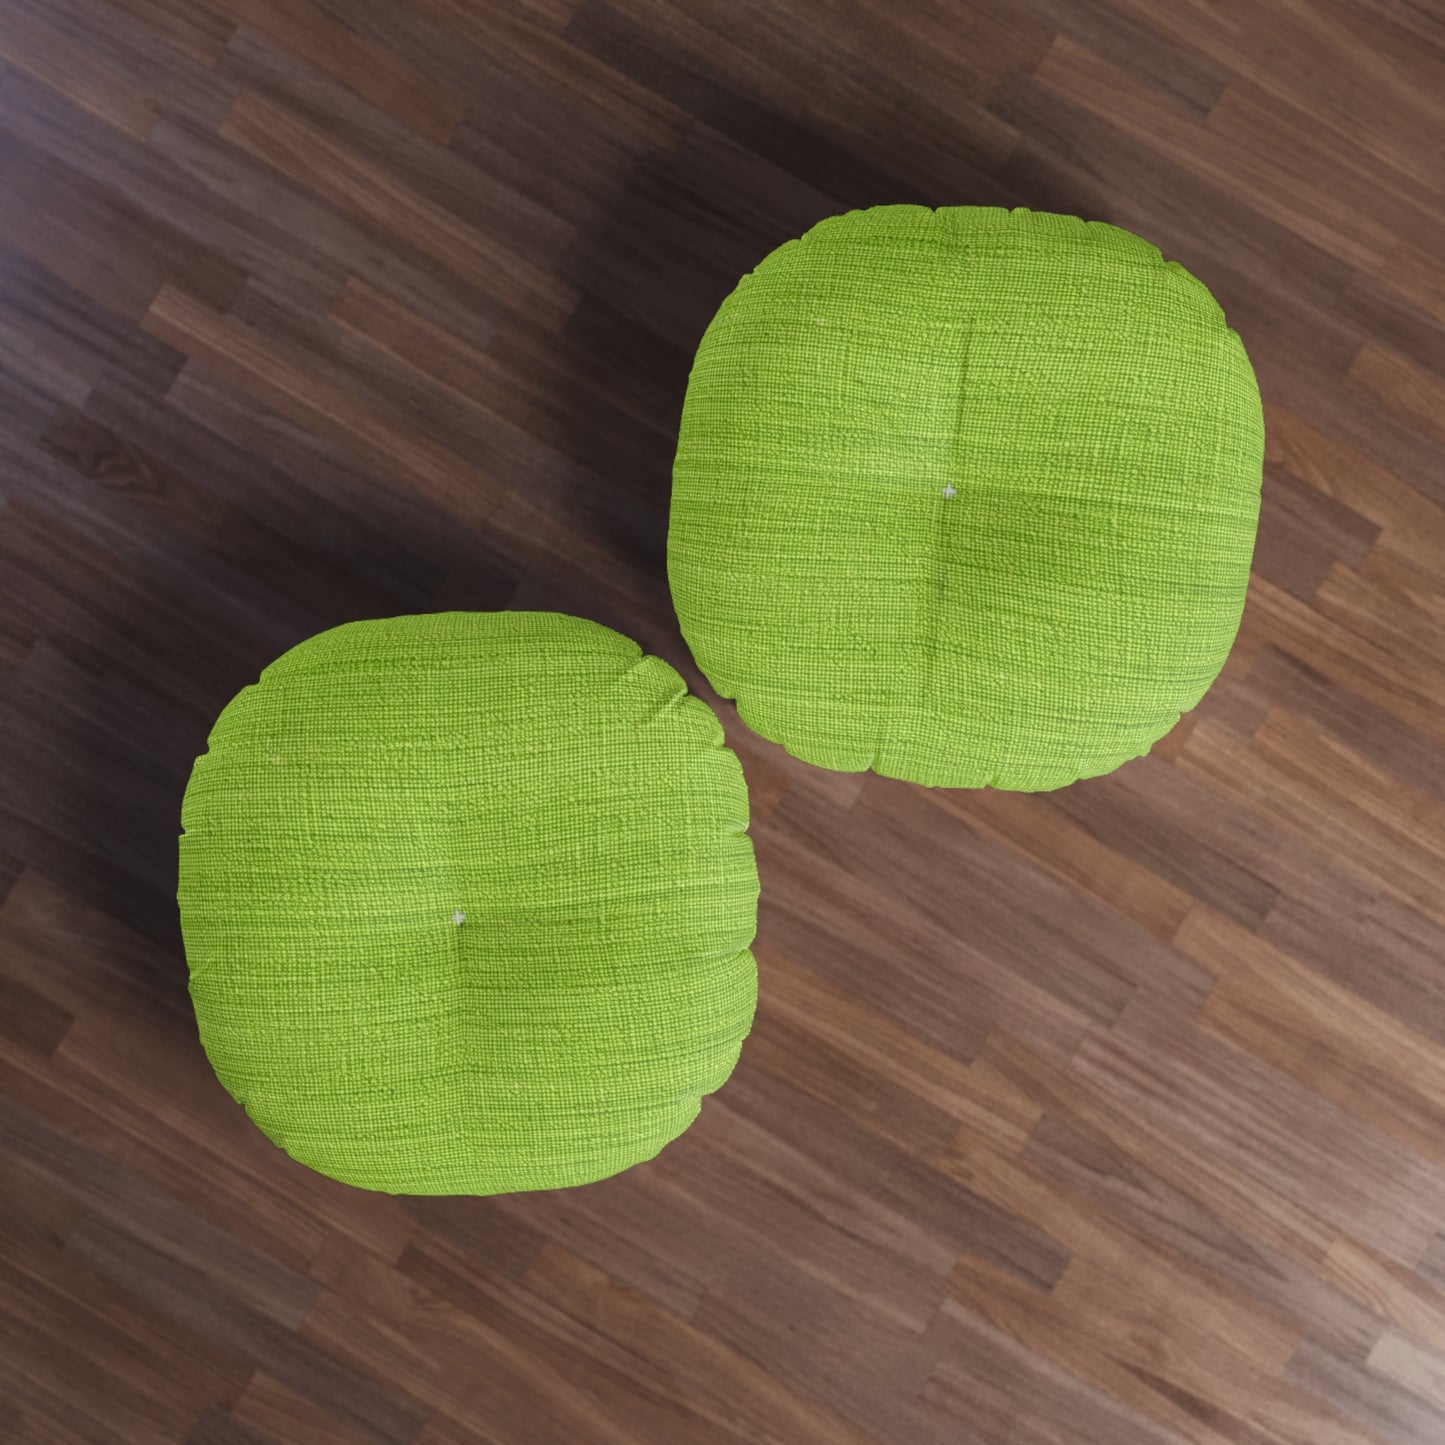 Lush Grass Neon Green: Denim-Inspired, Springtime Fabric Style - Tufted Floor Pillow, Round